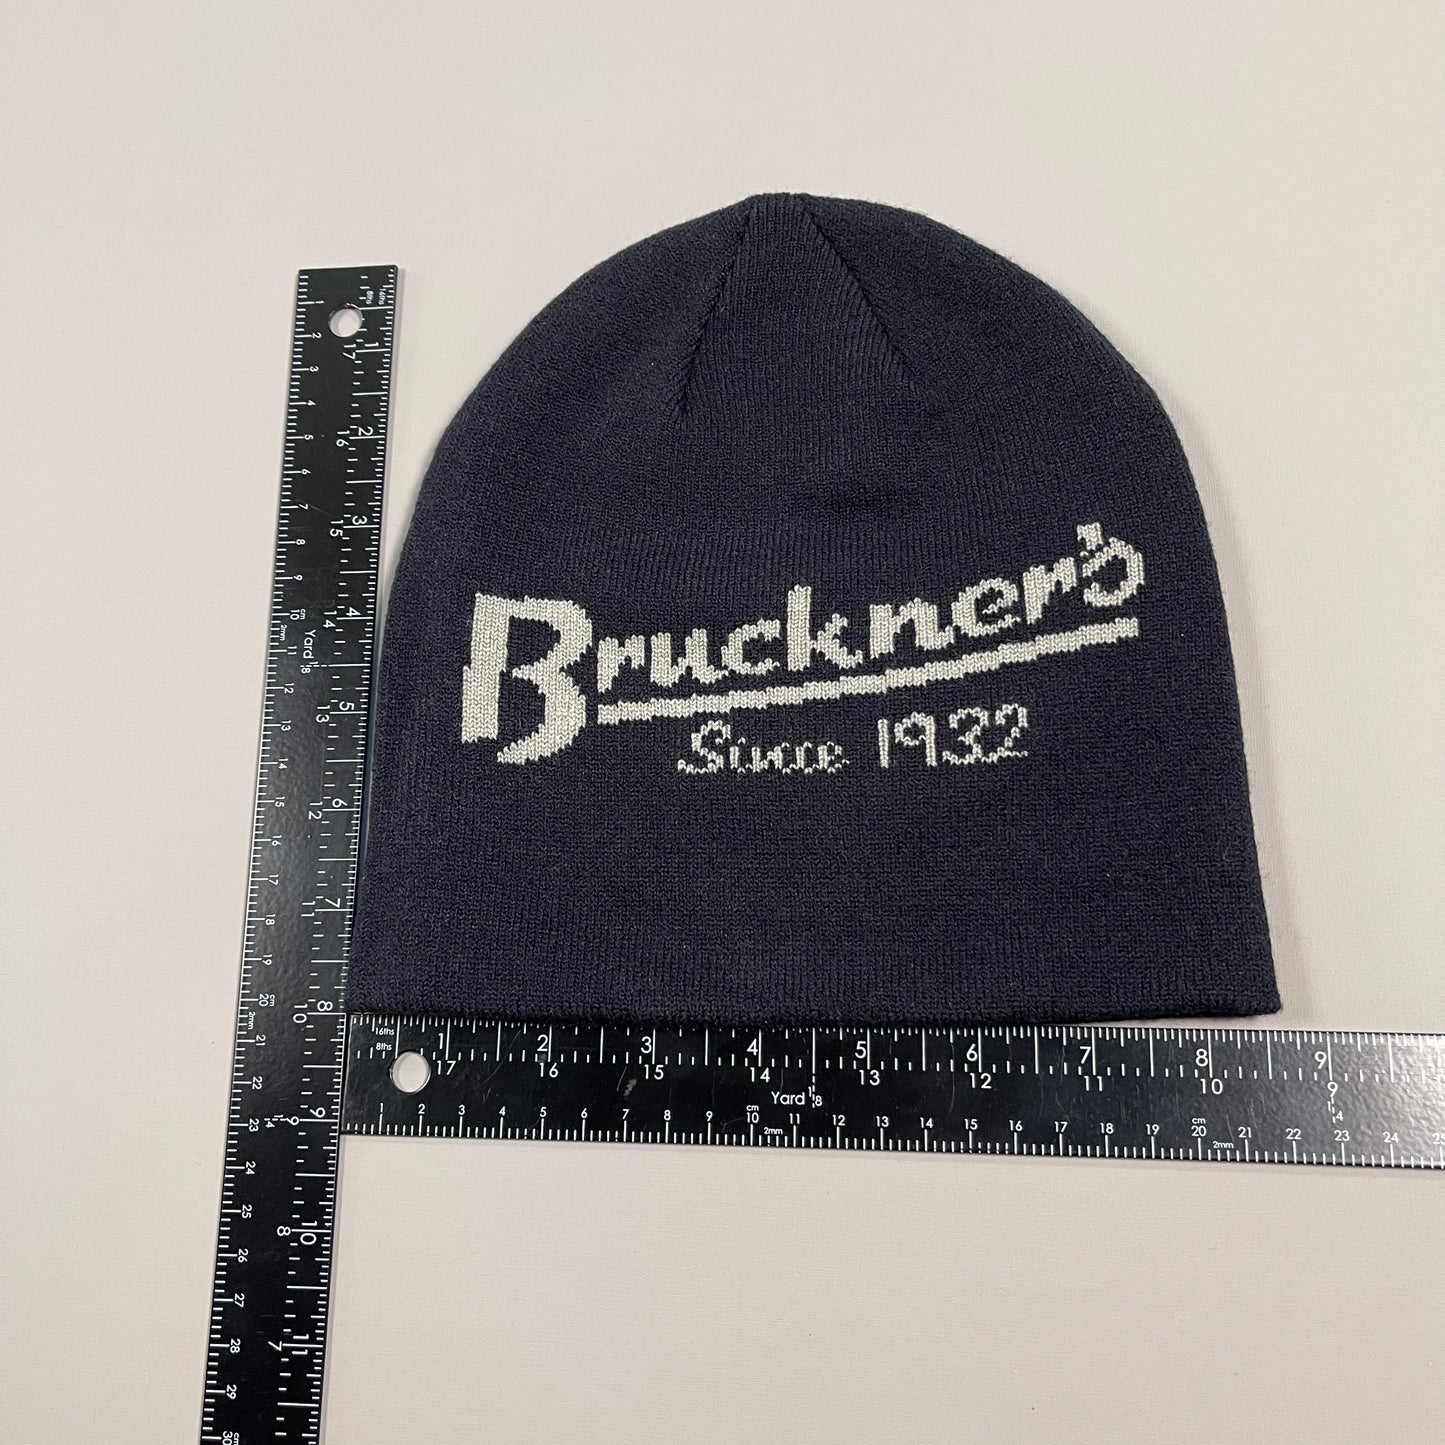 BRUCKNER'S Beanie Winter Hat Unisex Sz One Size Navy/White (New)